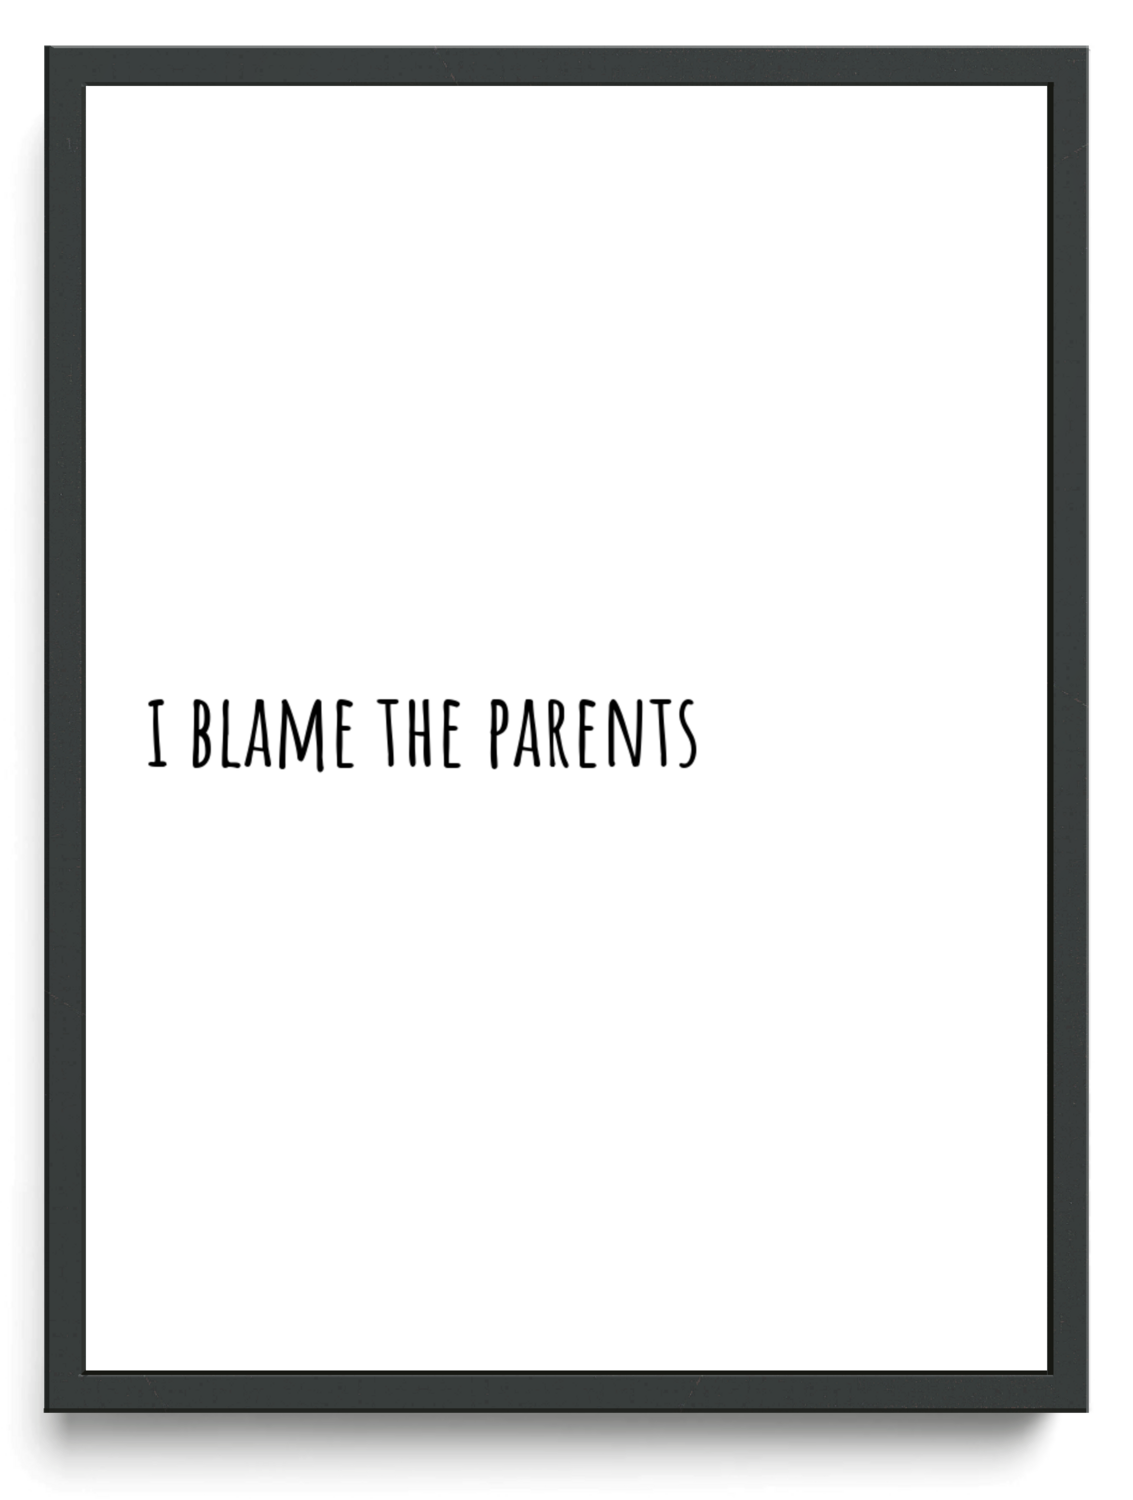 I blame the parents